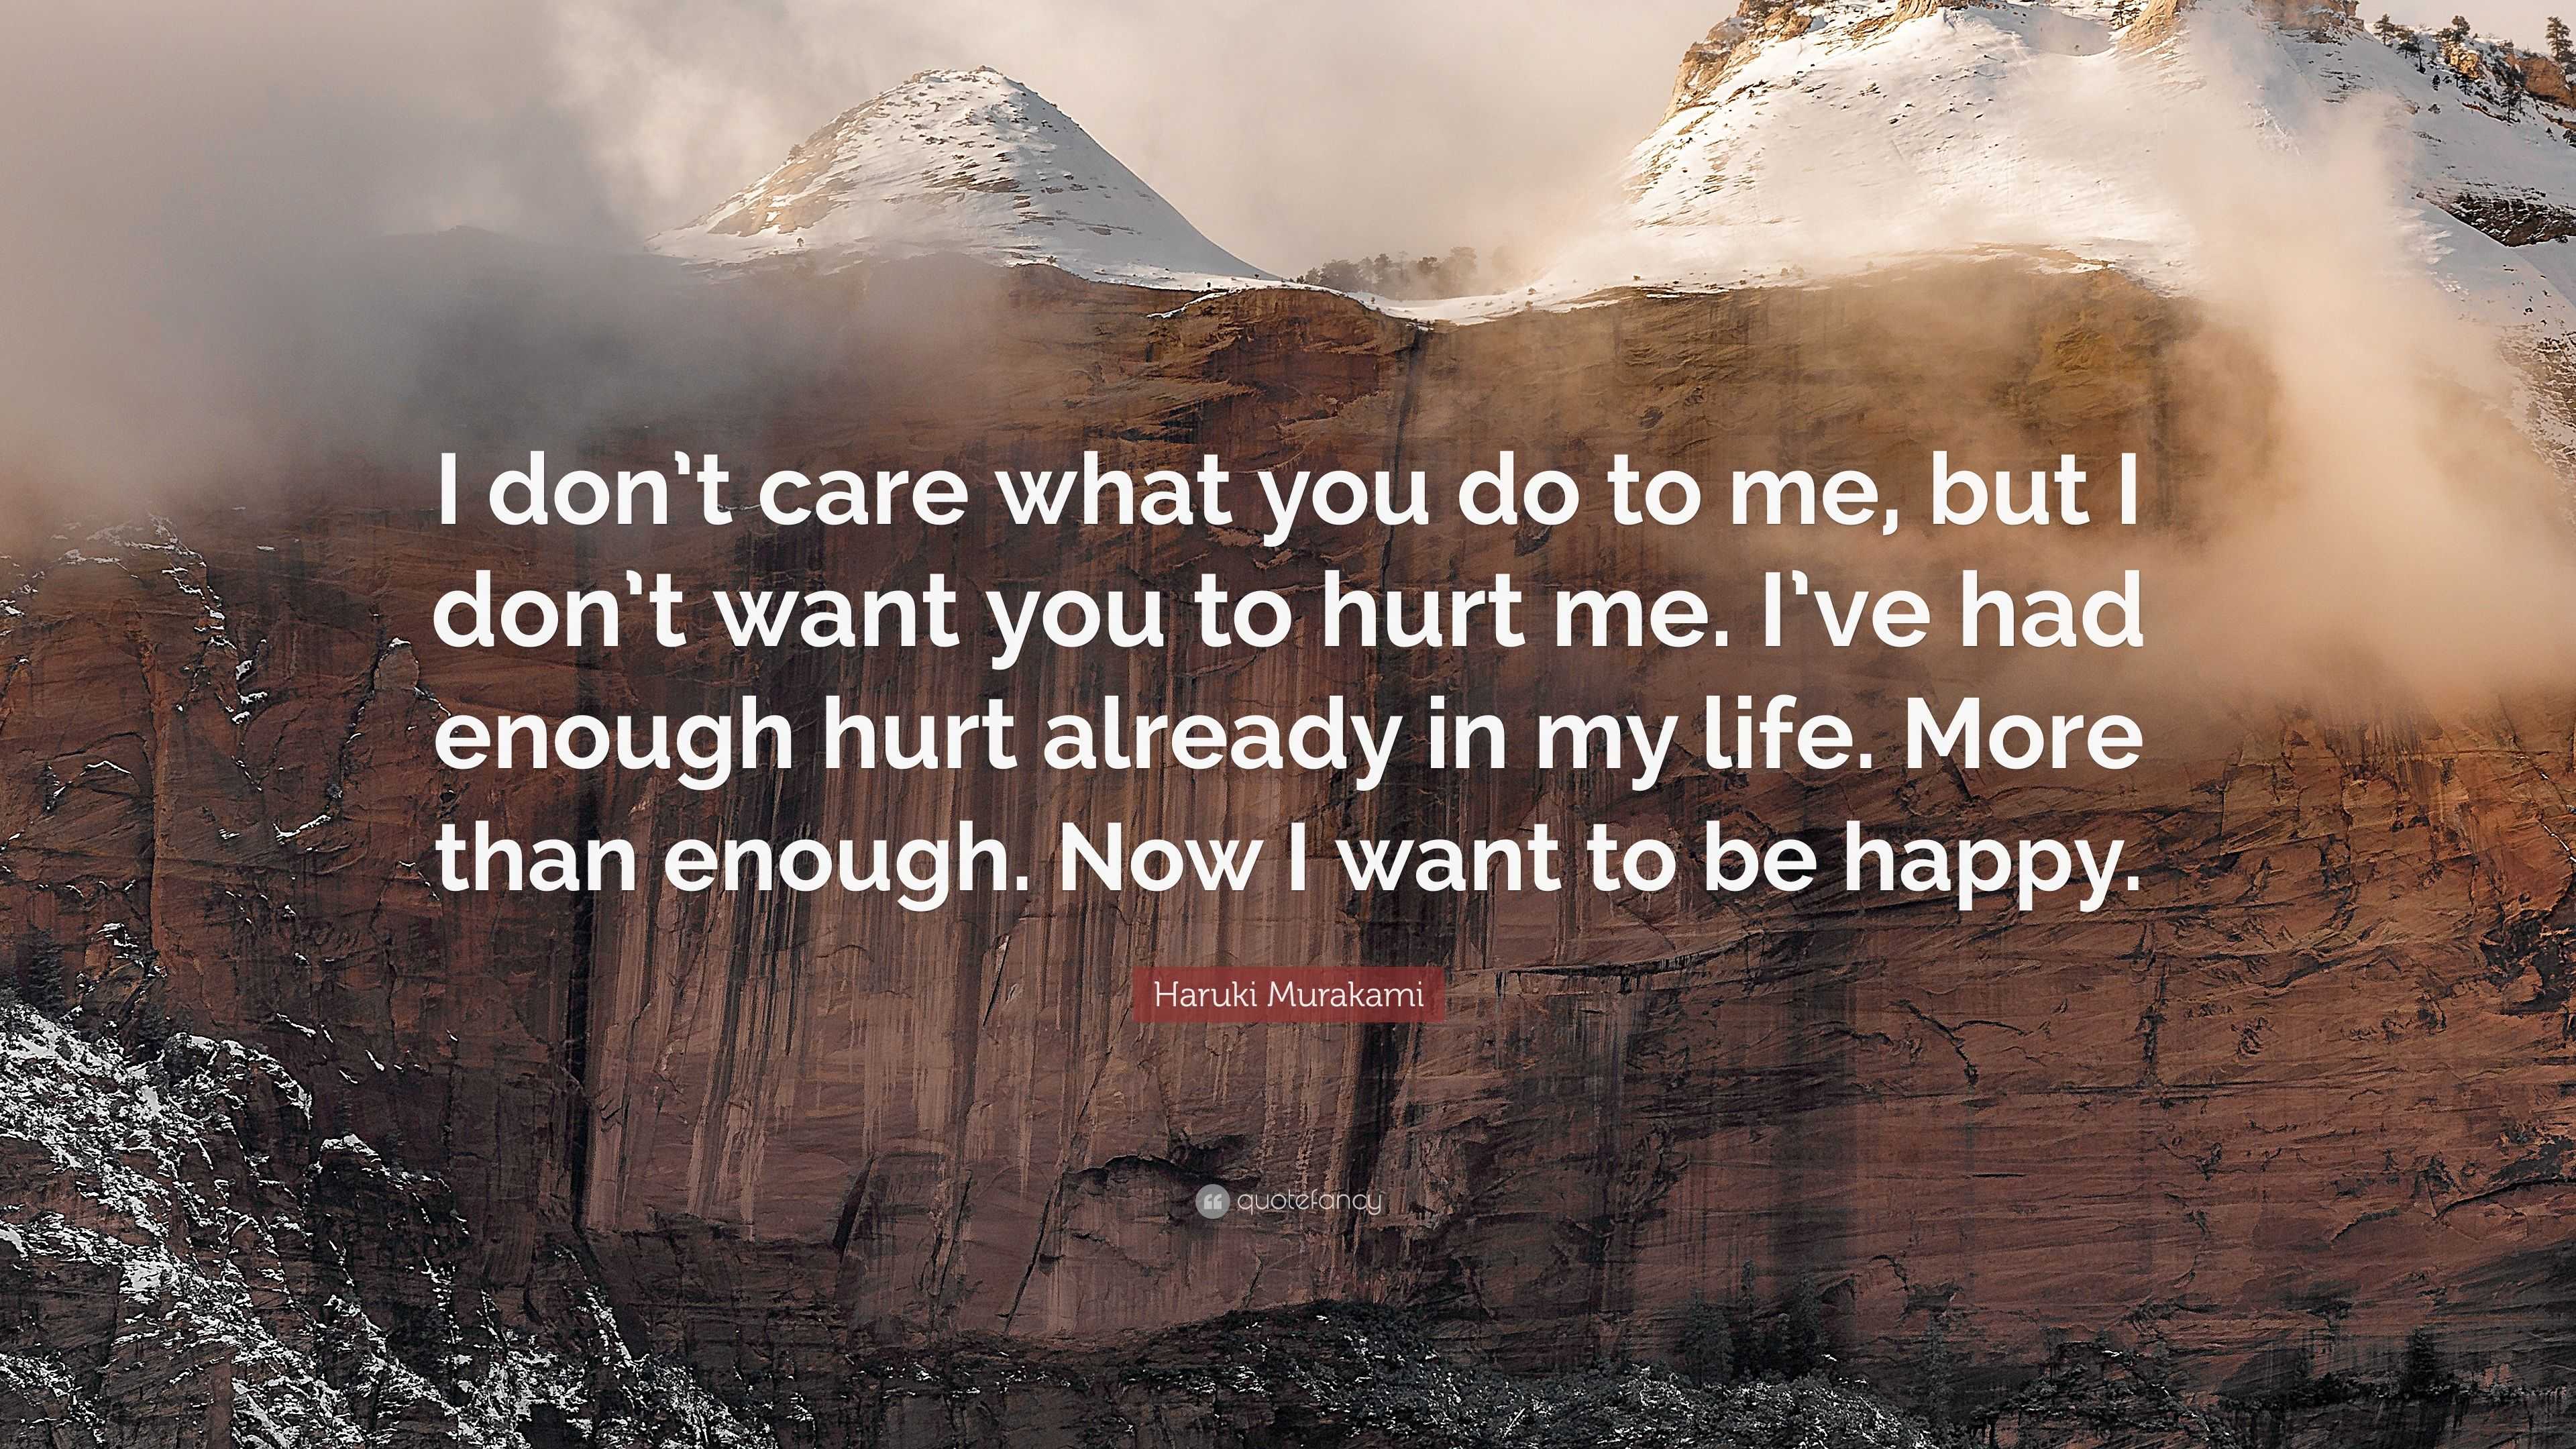 Haruki Murakami Quote “I don t care what you do to me